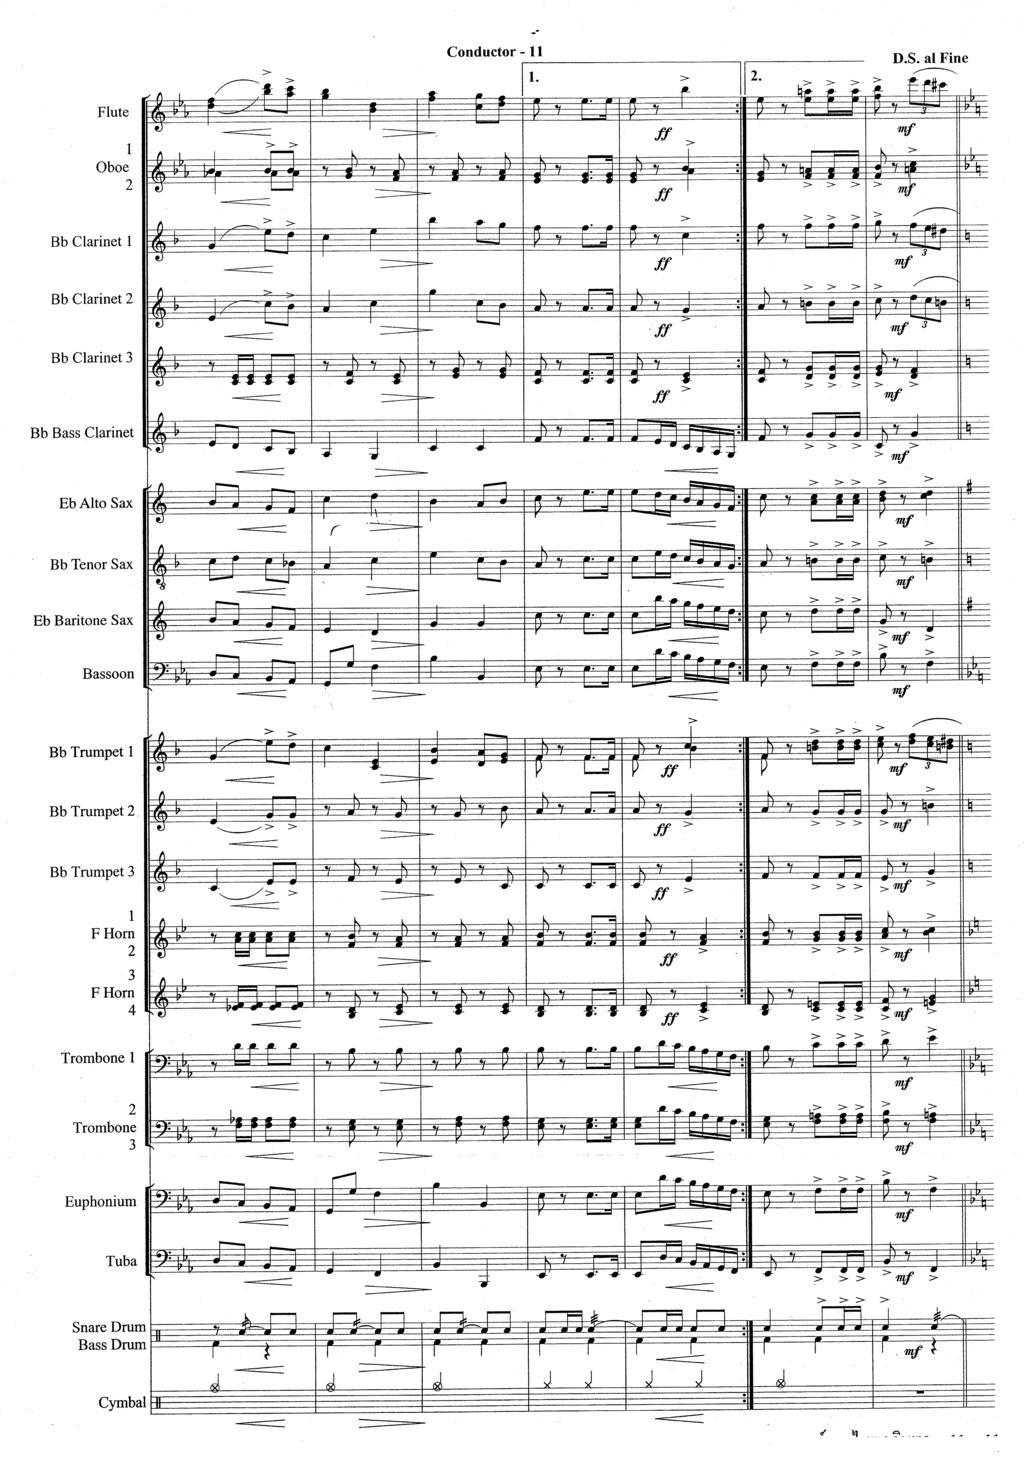 Flute Oboe Bb Clarinet Bb Clarinet Bb Clarinet Bb Bass Clarinet EbAlto Sax Bb Tenor Sax Eb Baritone Sax Bassoon Bb Trumpet BbTrumpet BbTrumpet FHorn FHorn 4 Trombone 1 Trombone Euphonium Tuba Snare